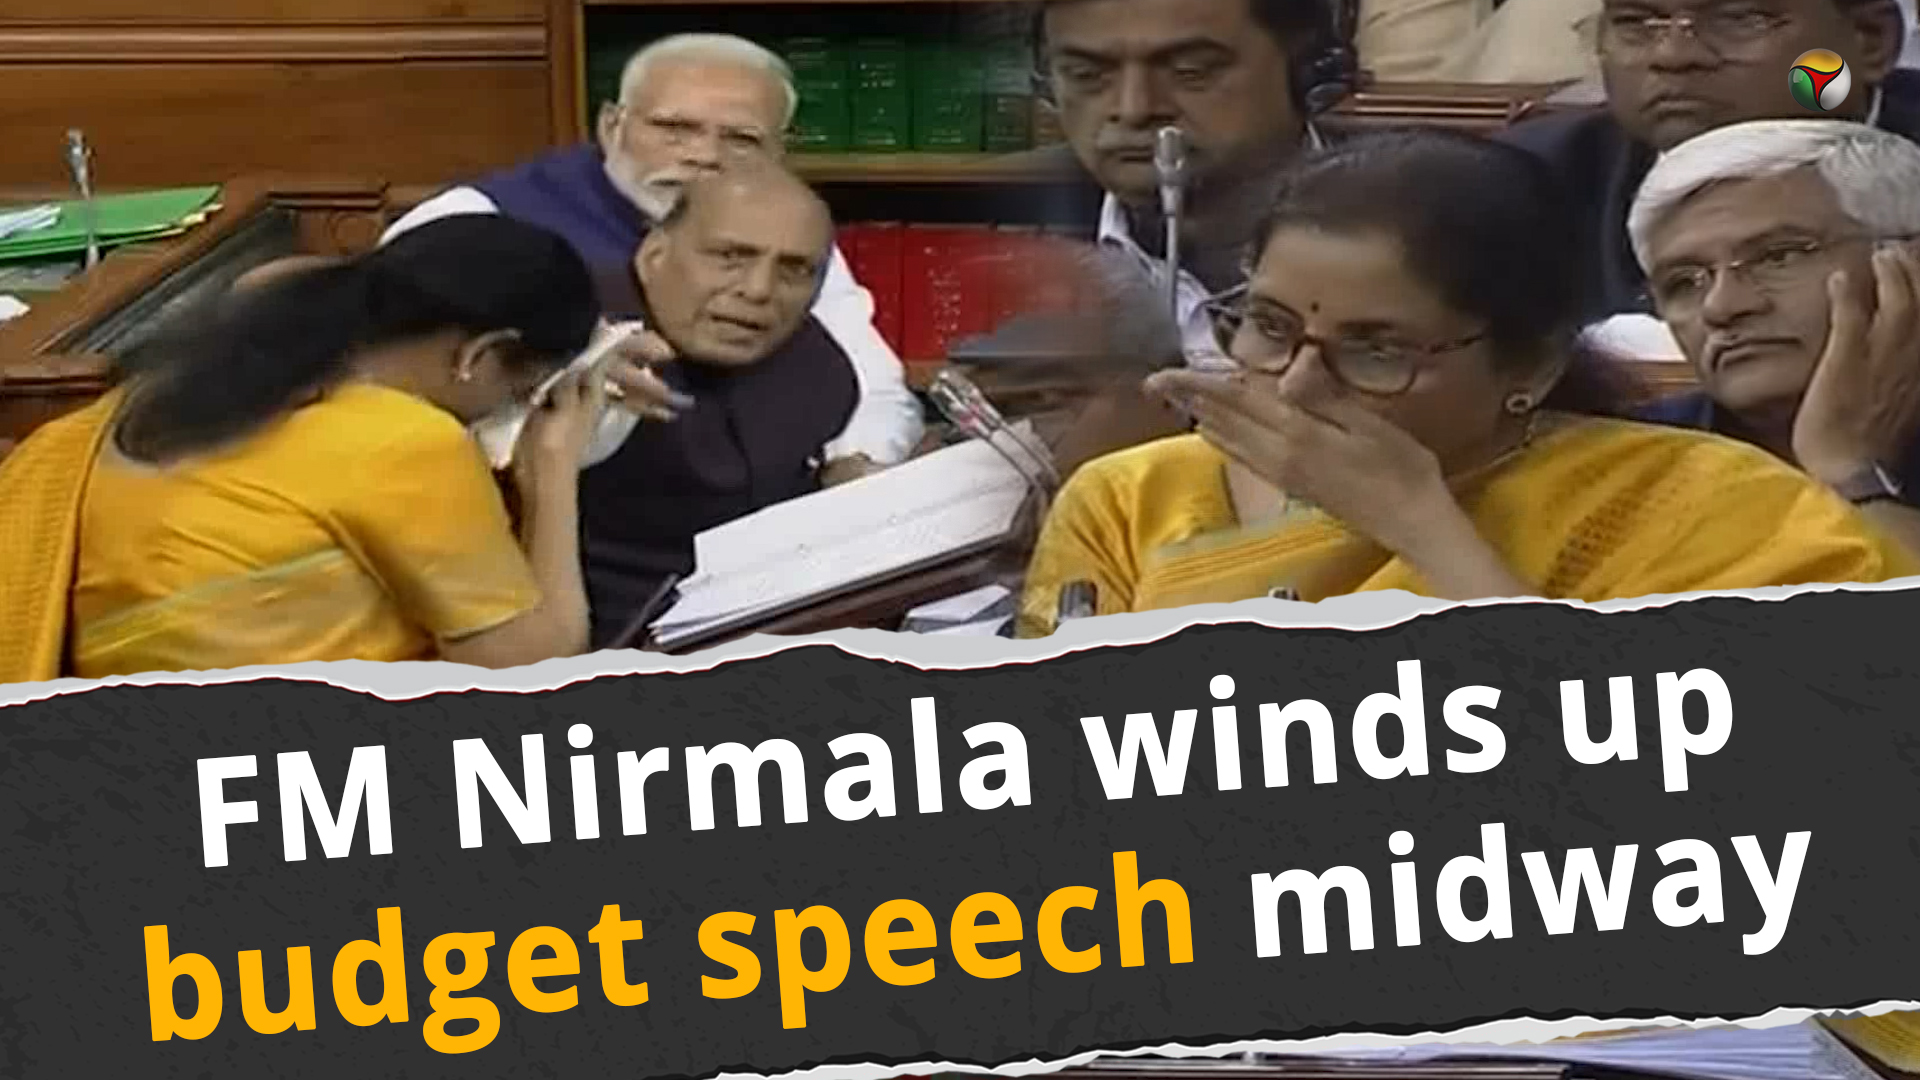 Finance Minister Nirmala winds up budget speech midway